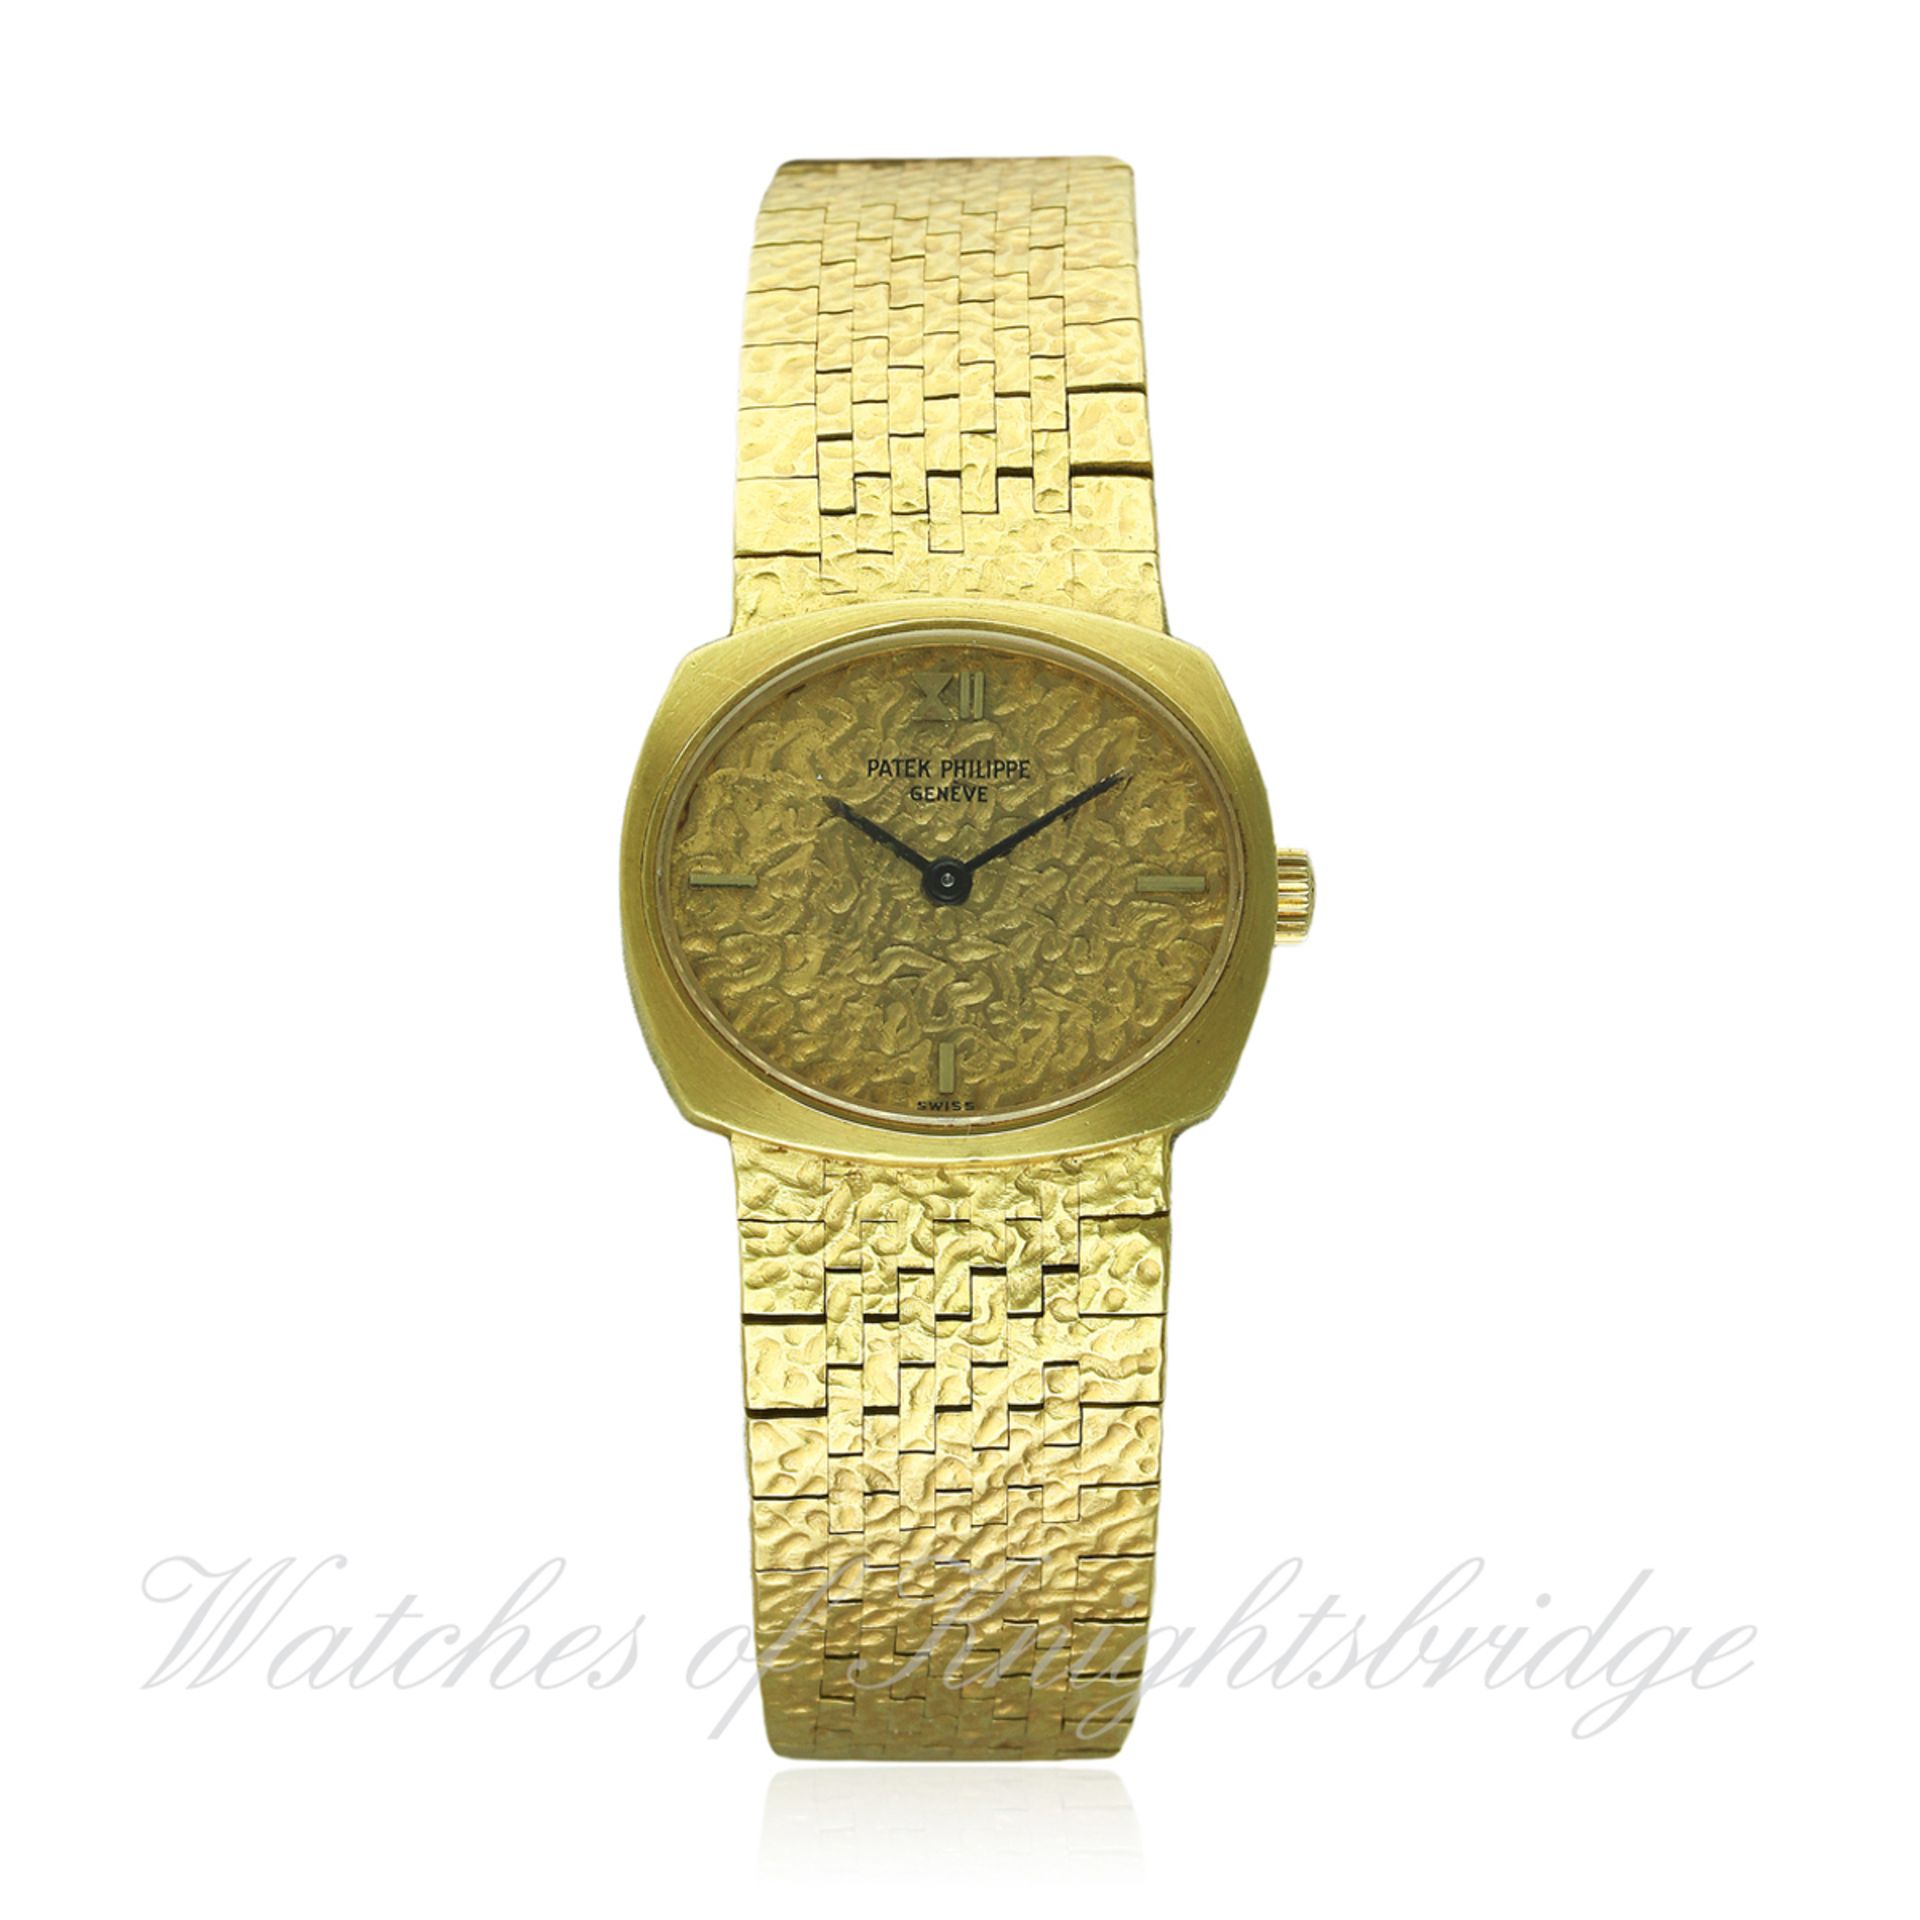 A LADIES 18K SOLID GOLD PATEK PHILIPPE BRACELET WATCH CIRCA 1970s, REF. 4104 1
D: Gold embossed dial